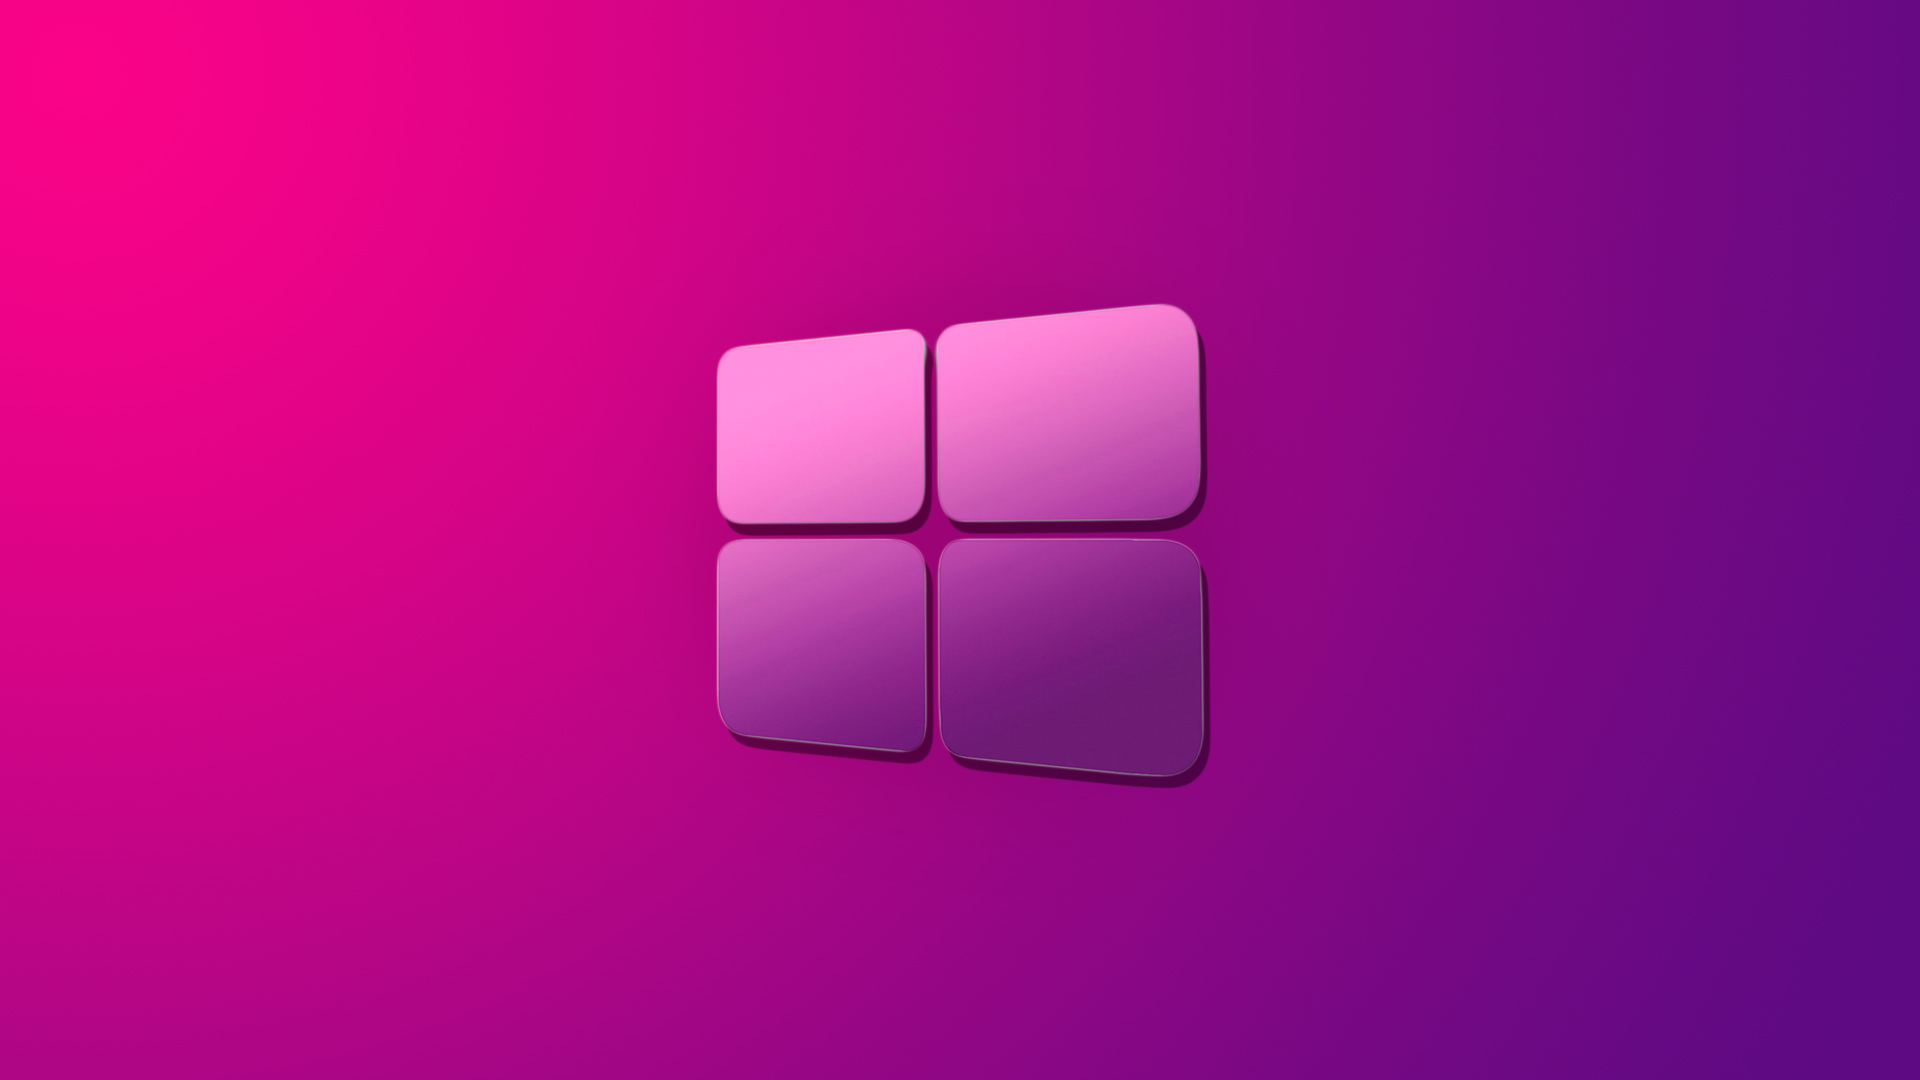 General 1920x1080 Windows 10 minimalism logo gradient digital art purple background